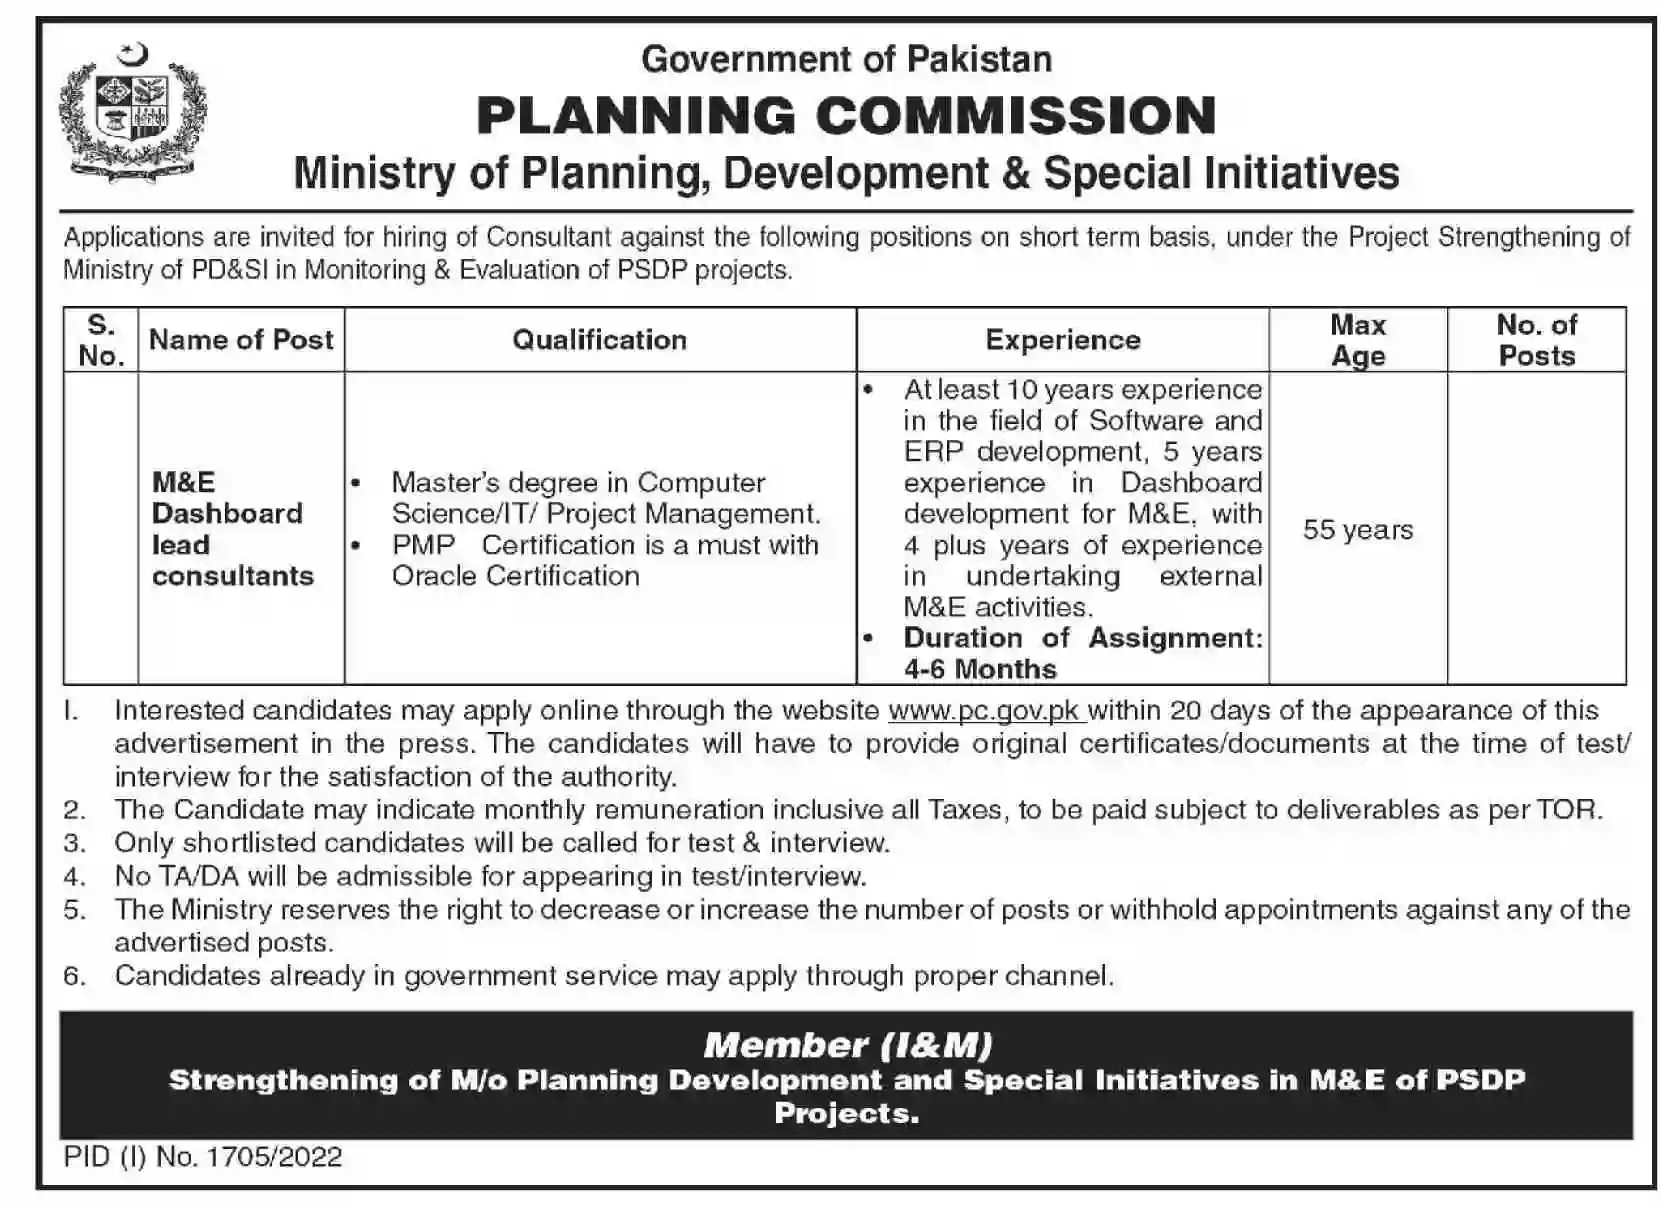 Ministry of Planning, Development & Special Initiatives Jobs 2022 www.pc.gov.pk